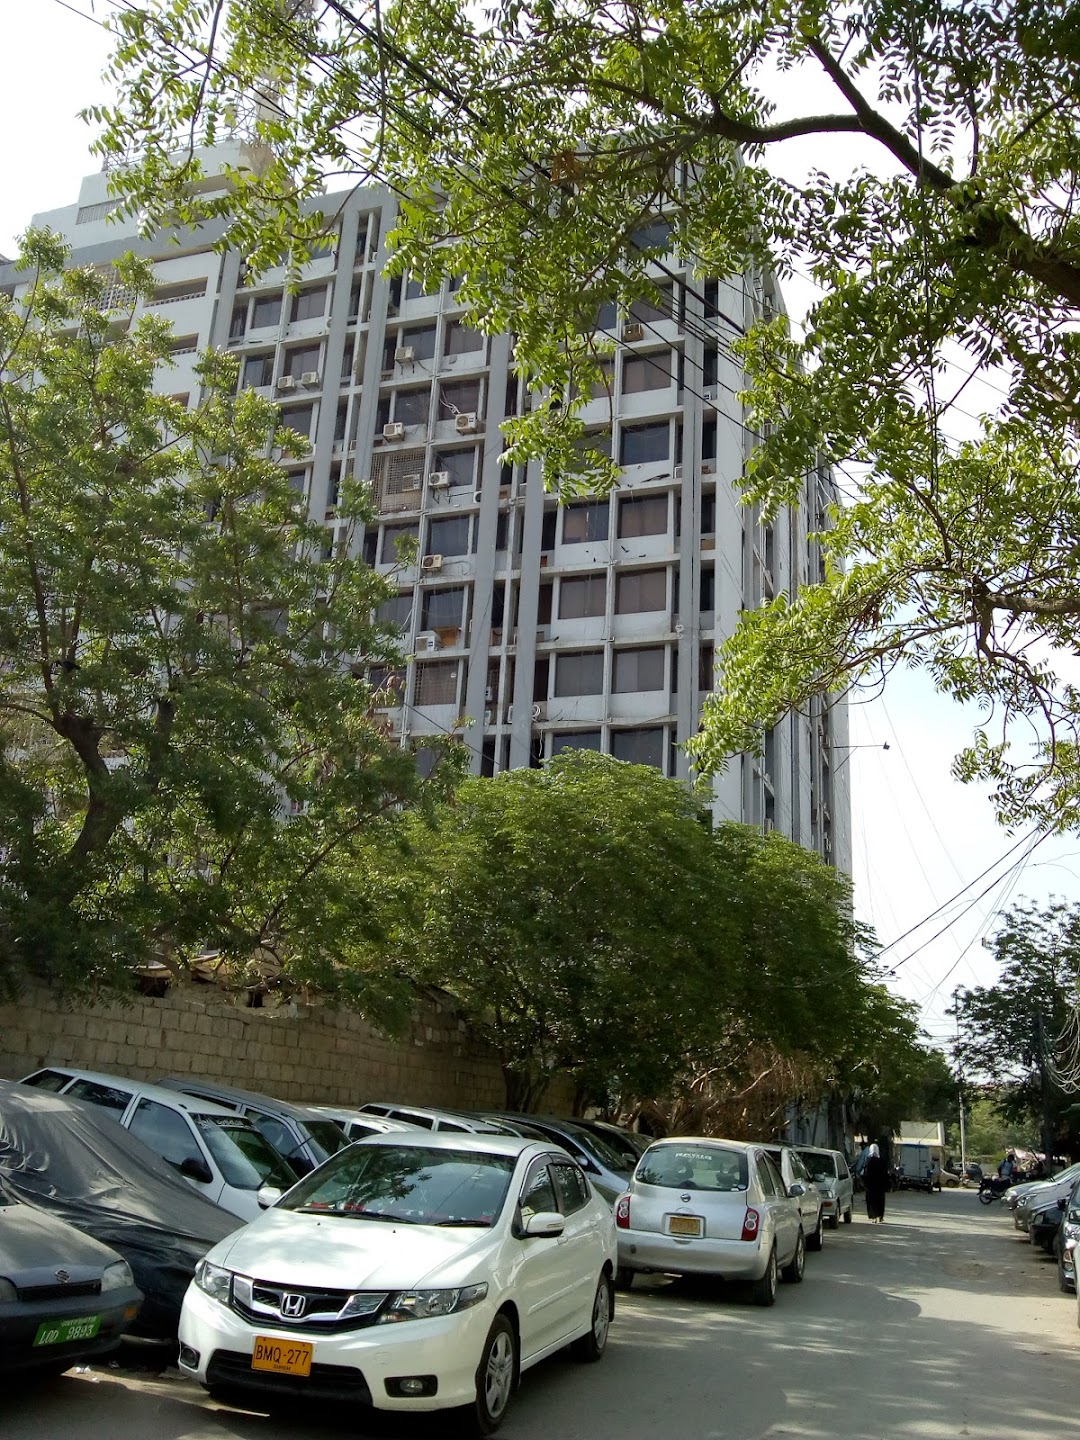 Compsi Pvt Ltd (Karachi Office)